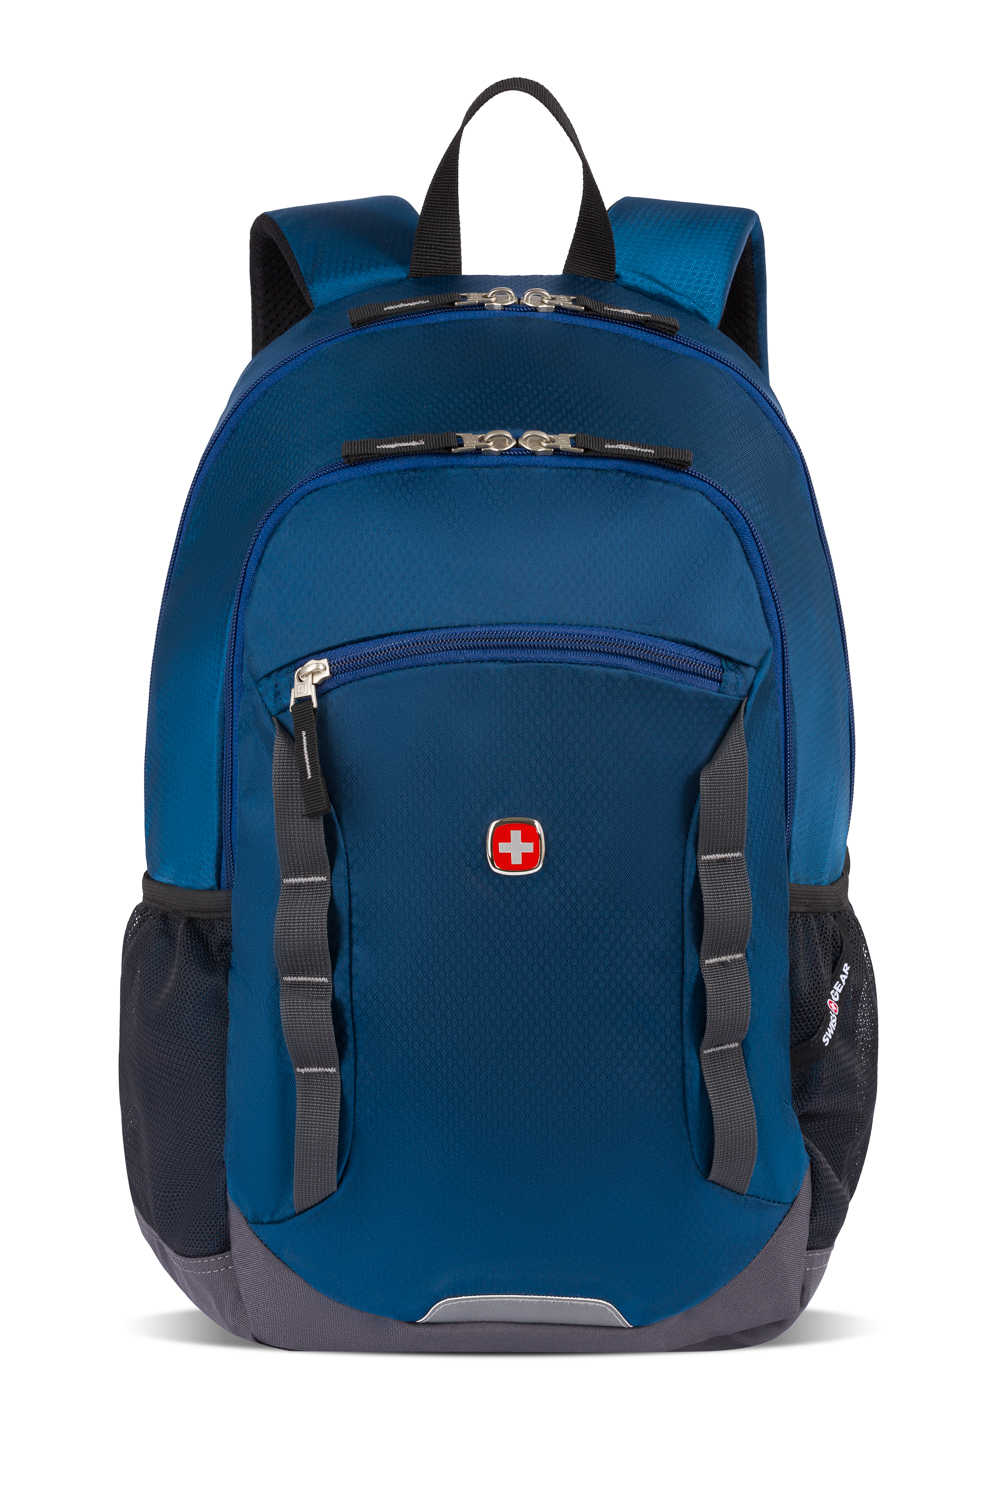 Swissgear 3795 Backpack - Indigo Blue